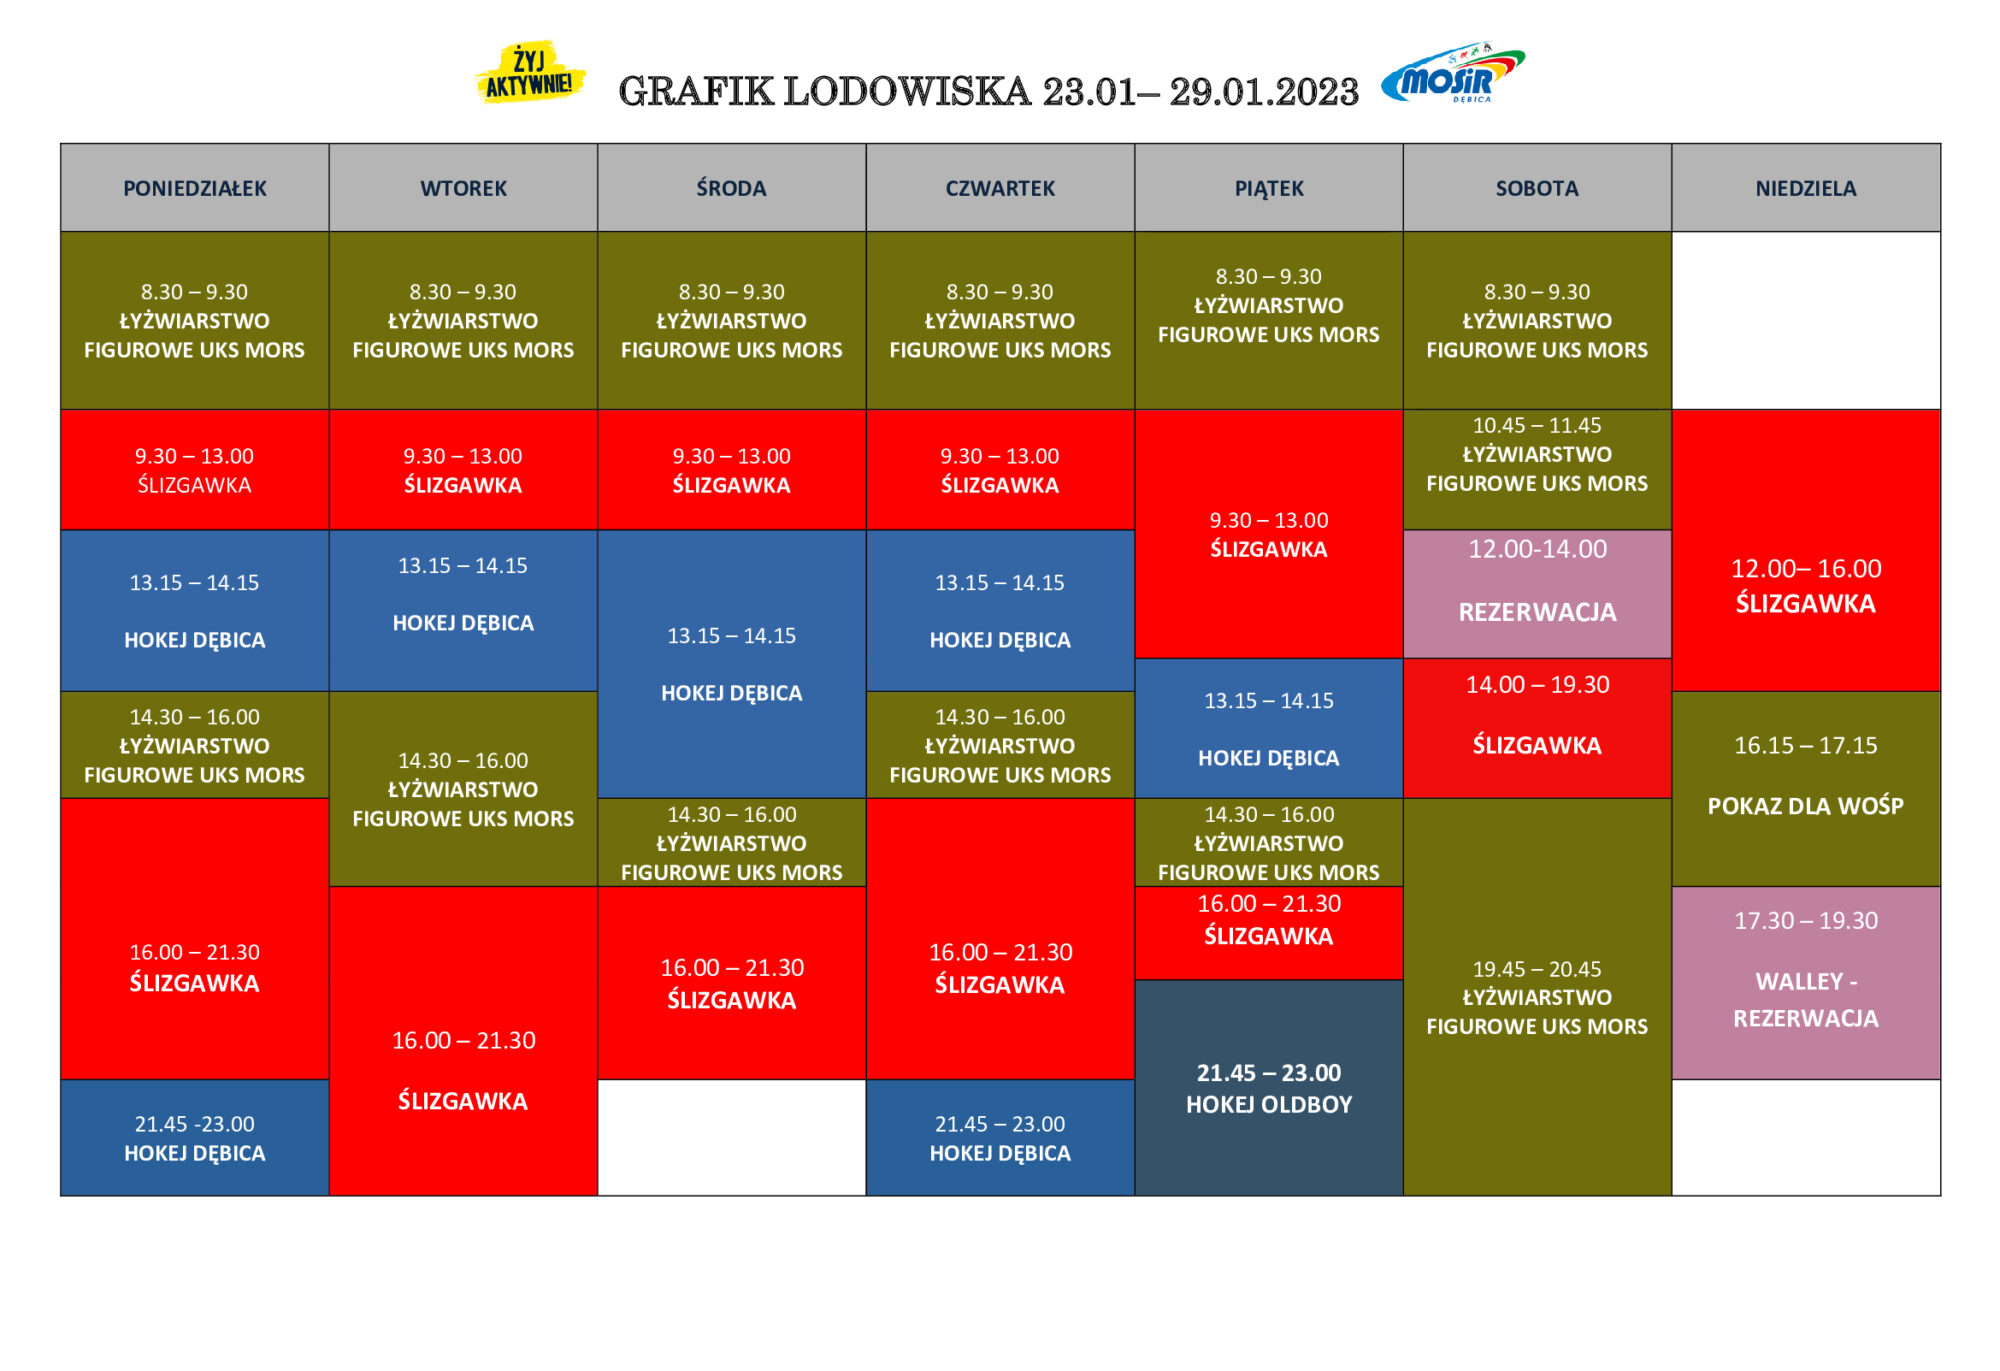 GRAFIK-LODOWISKA-23.01-29.01.2023-AKTUALIZACJA(1)